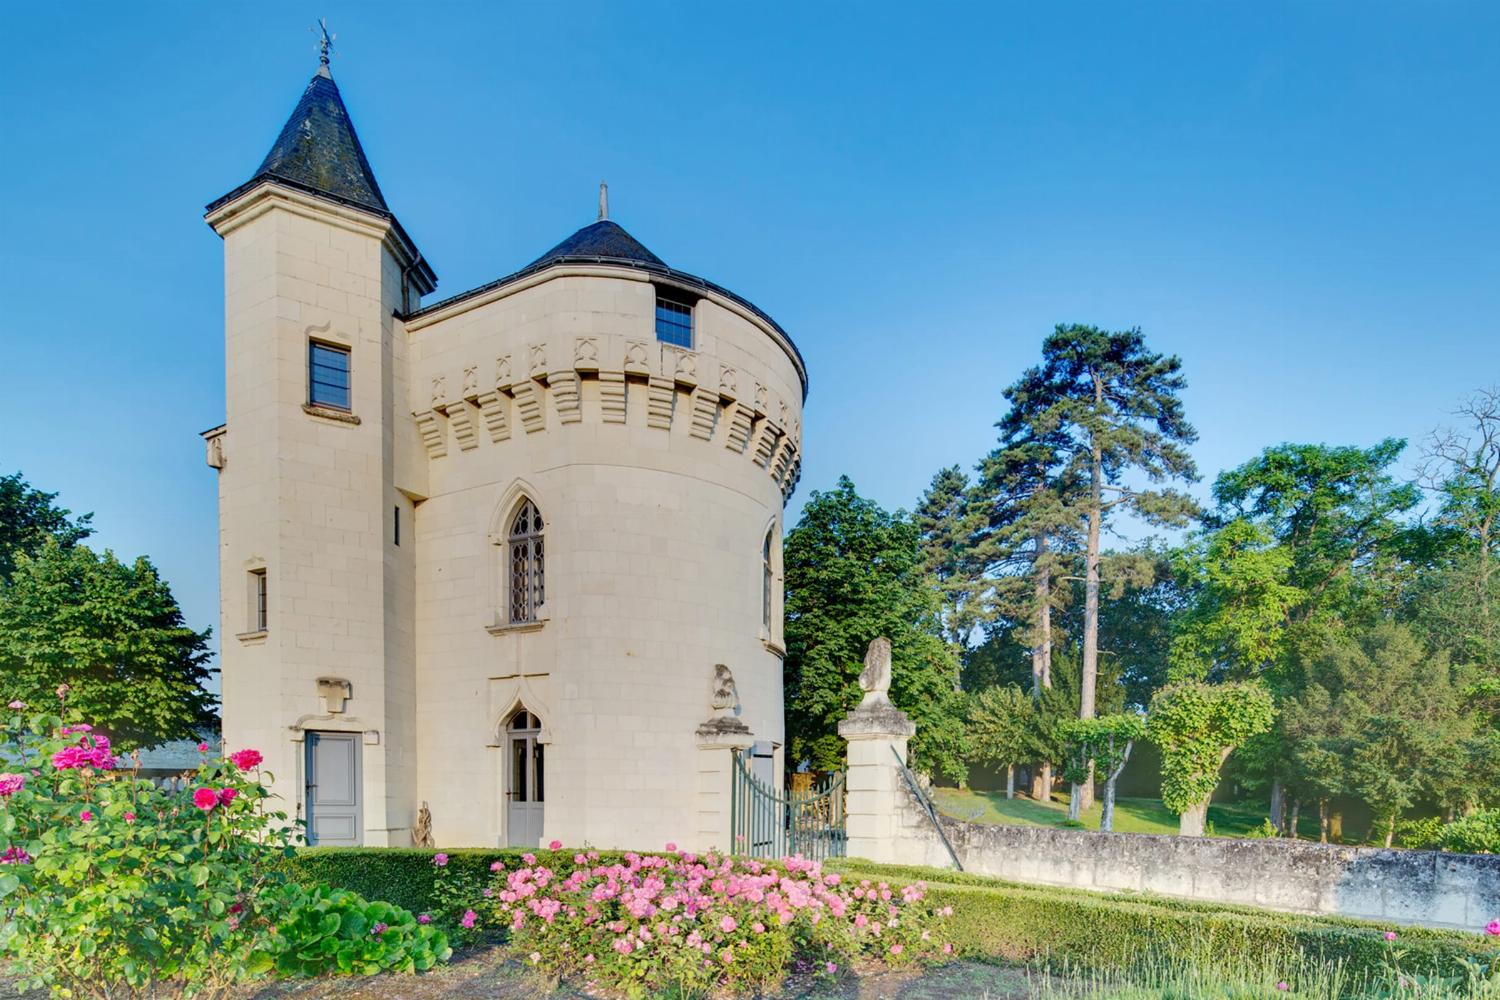 Holiday château in Centre-Val de Loire